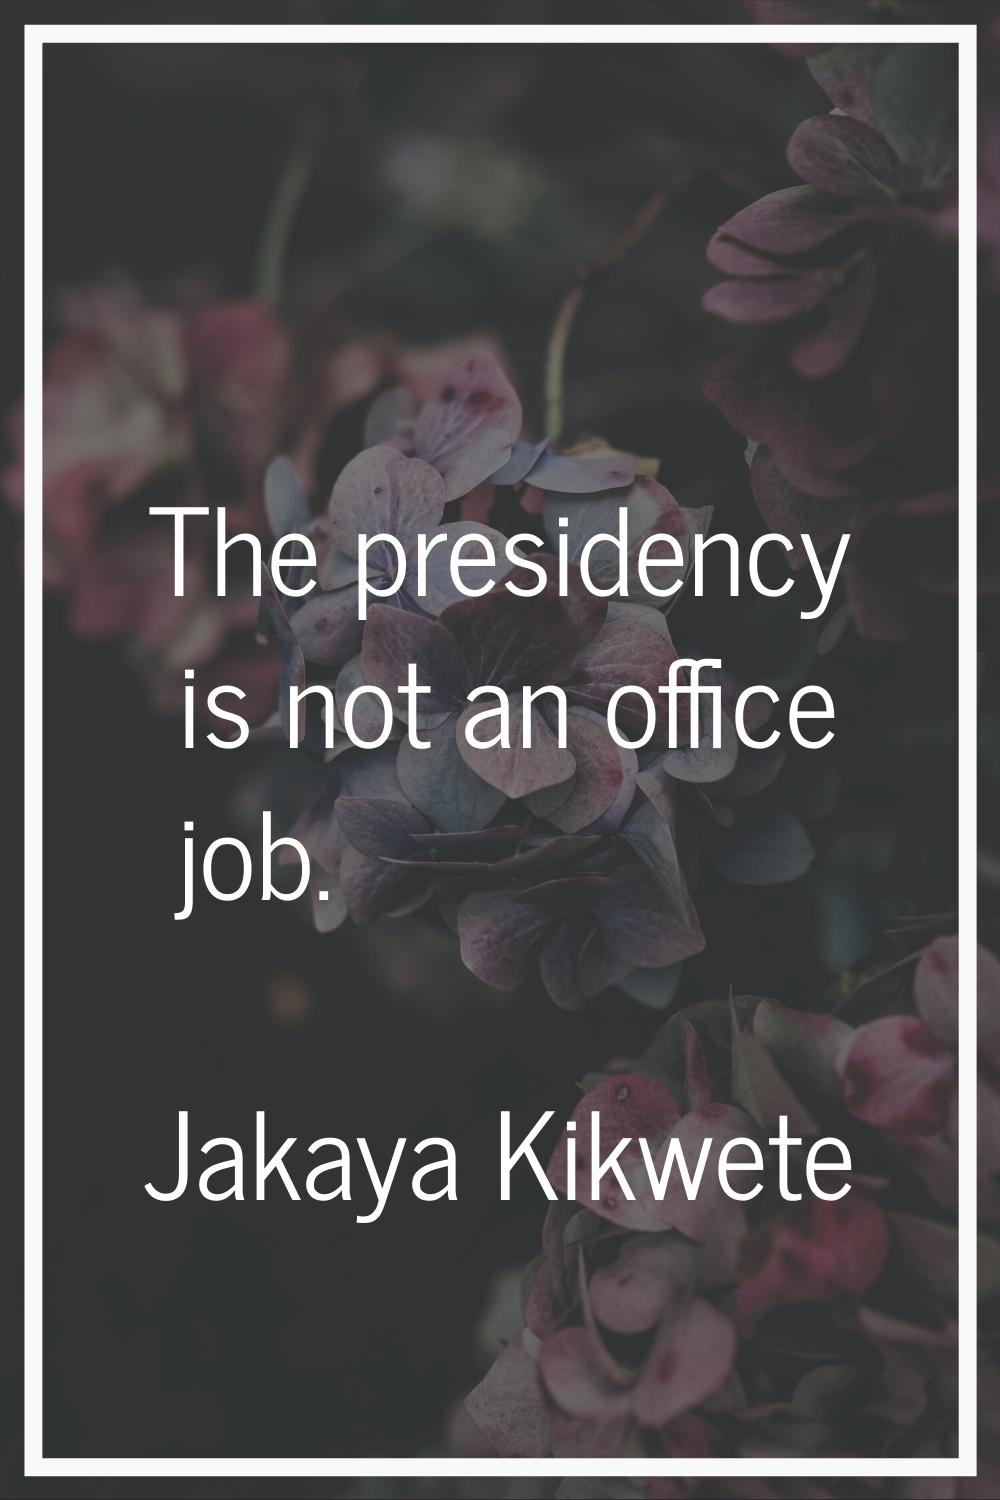 The presidency is not an office job.